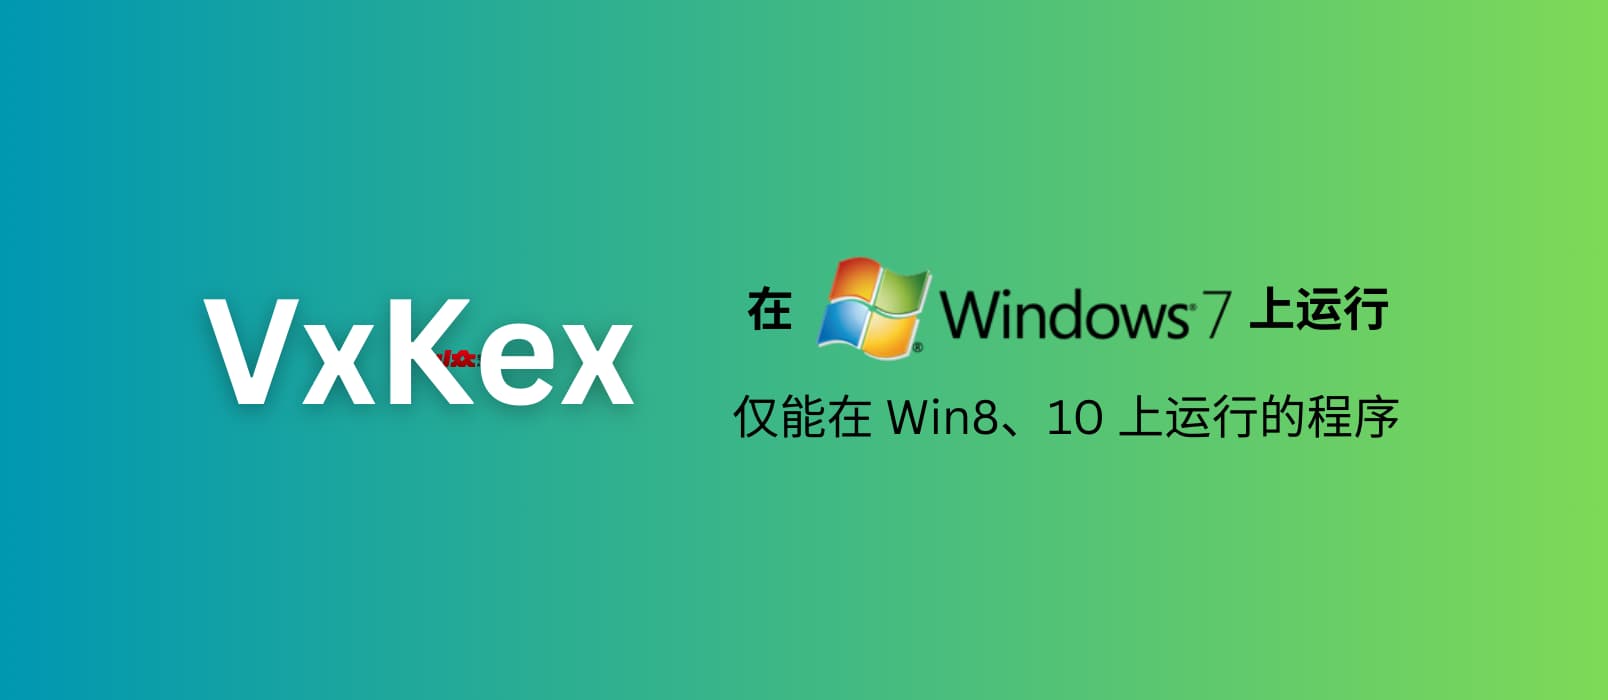 VxKex – 让 Windows 7 系统支持仅能在 Win8、10 上运行的程序，包括 Chromium、MPV、Python、VSCode 等